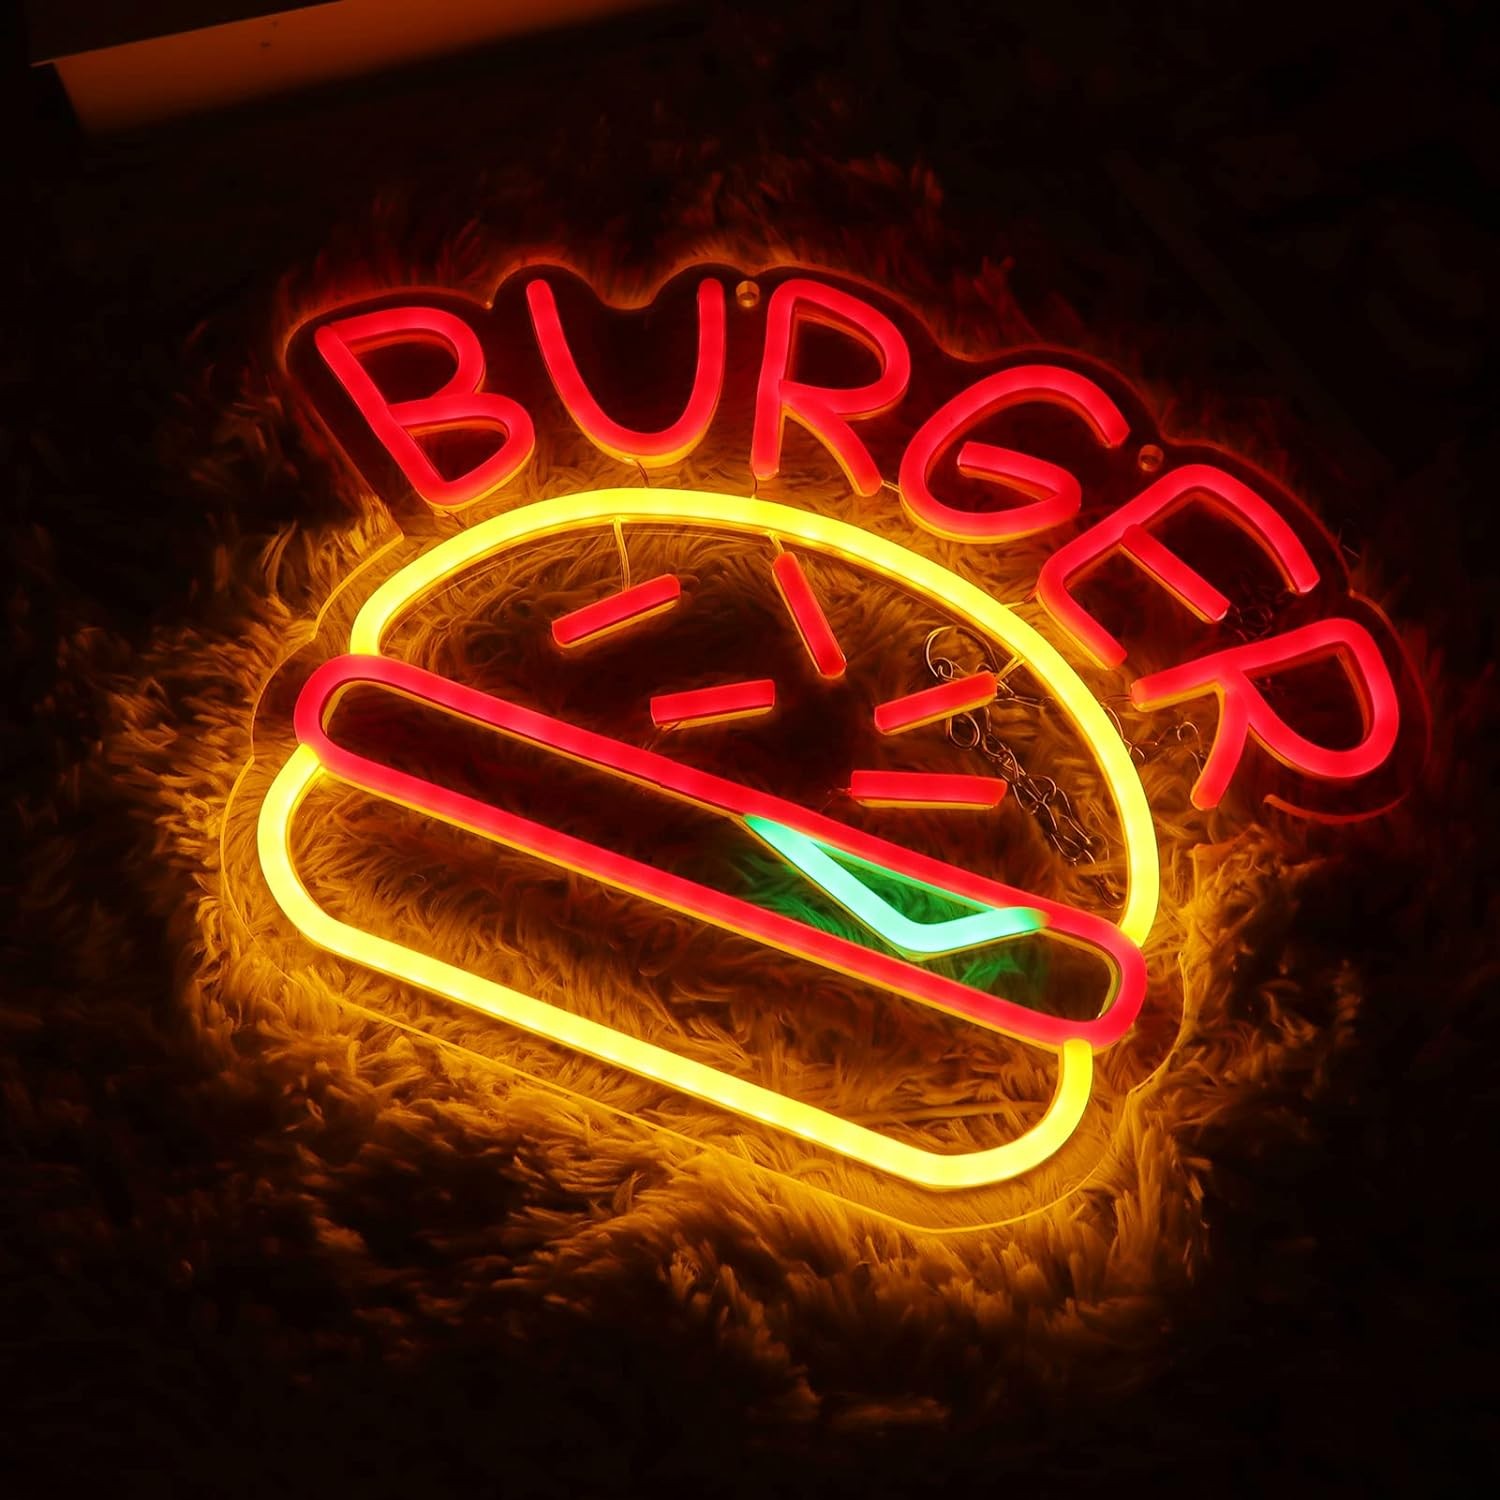 Burger reklāmas izgaismota kvēlojoša LED neona izkārtne